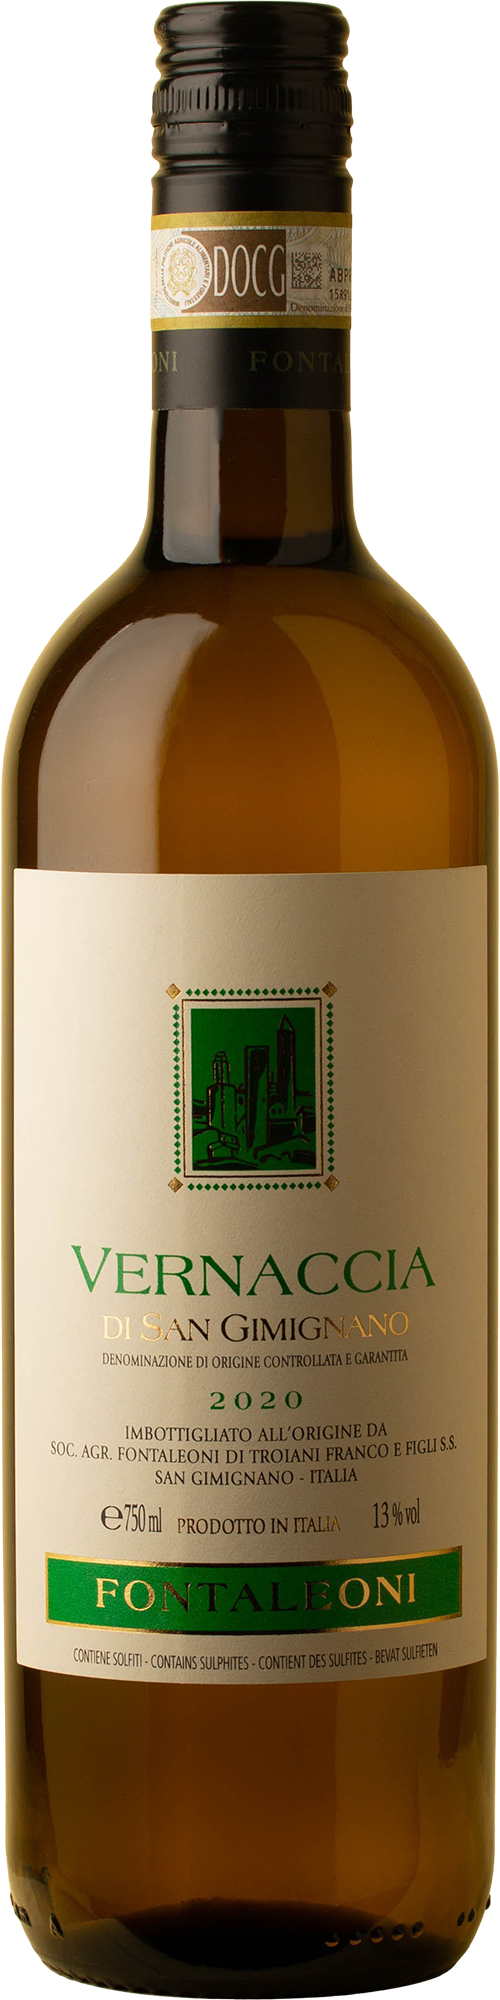 Fontaleoni - Vernaccia di San Gimignano Vernaccia 2020 White Wine